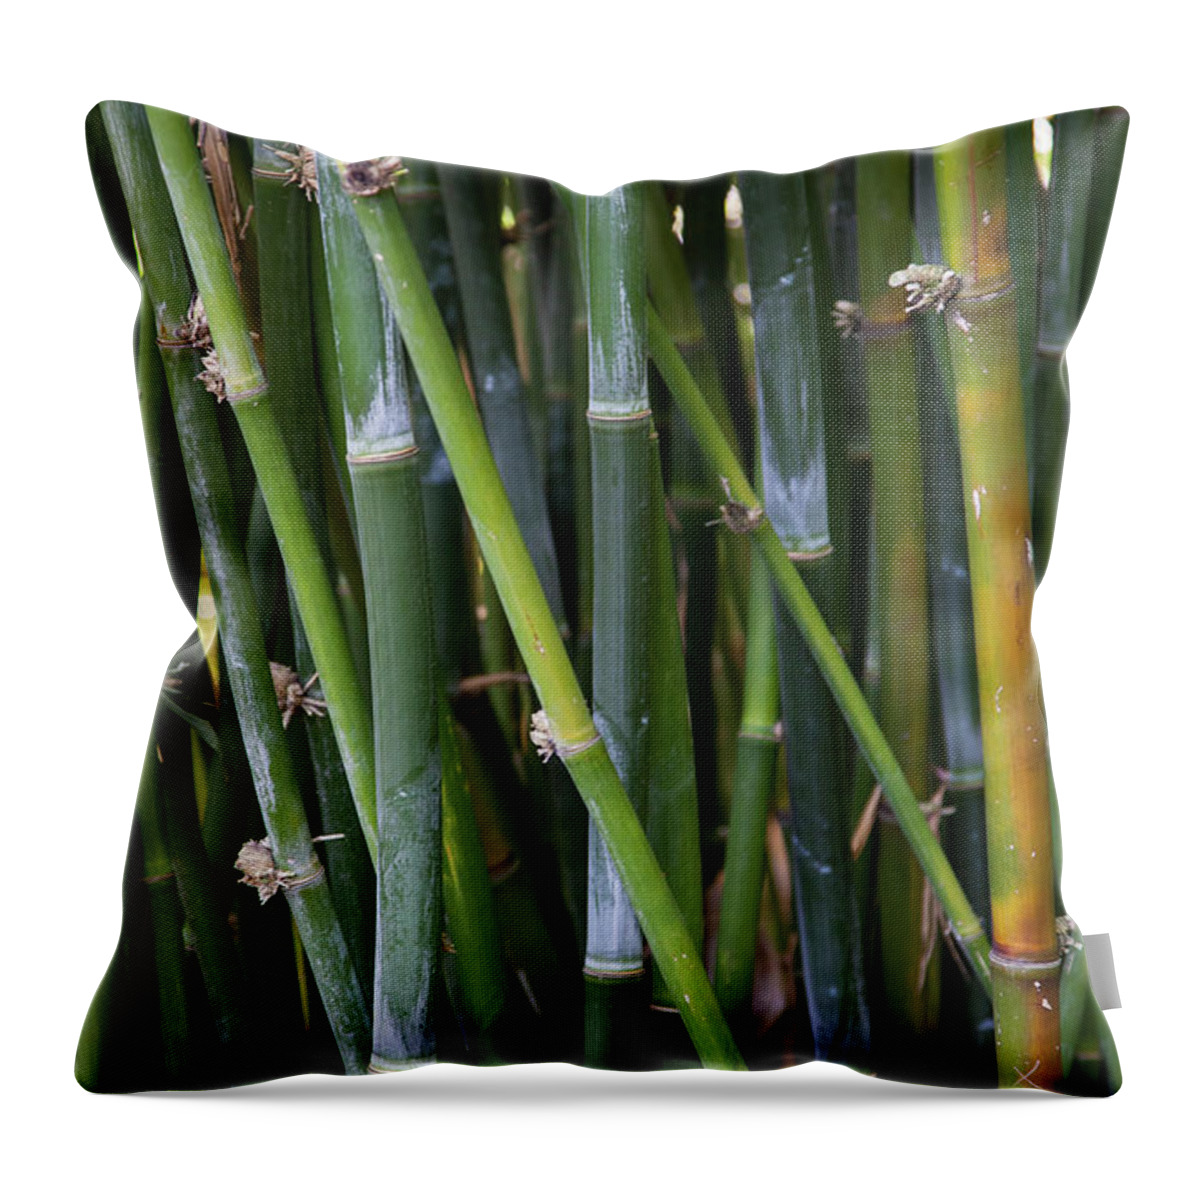 Bamboo Throw Pillow featuring the photograph Bamboo Garden by Timothy Johnson